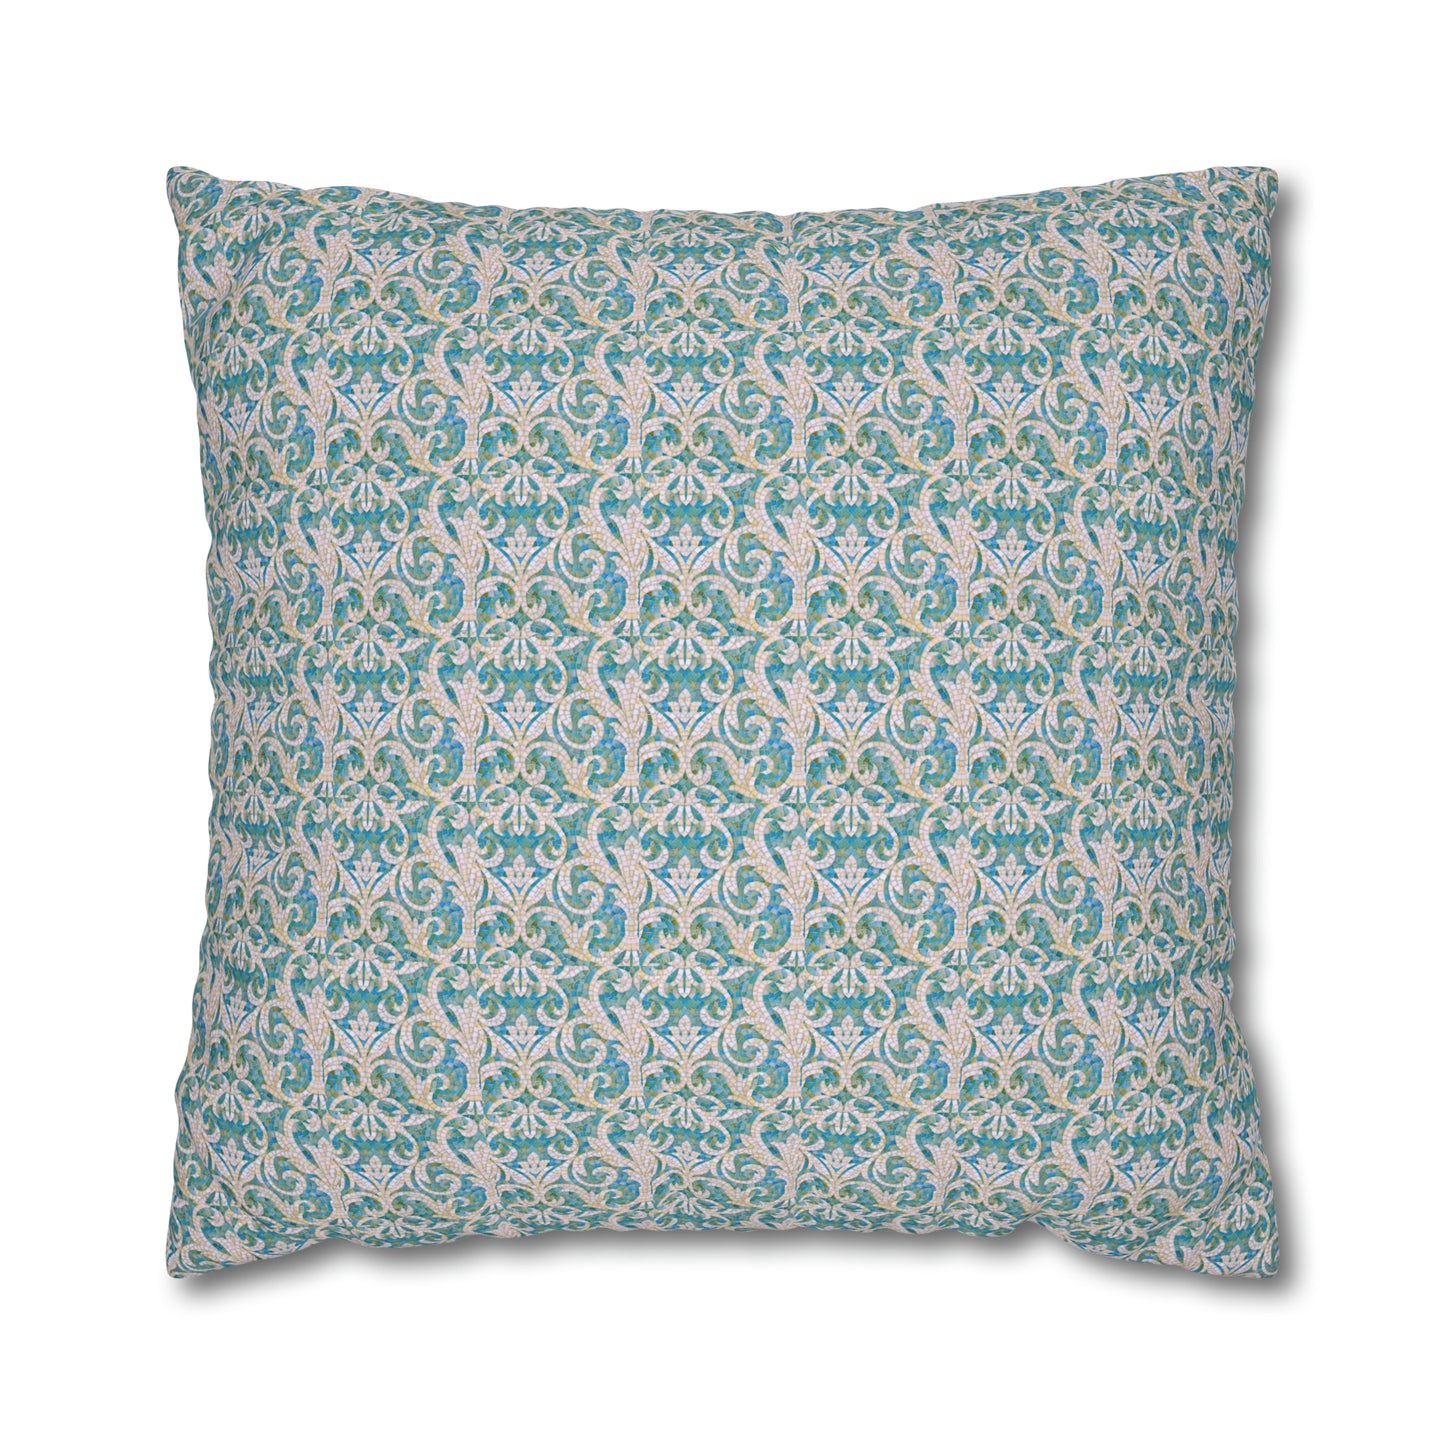 Aqua Mosaic European Vintage Tile Decorative Spun Polyester Pillow Cover